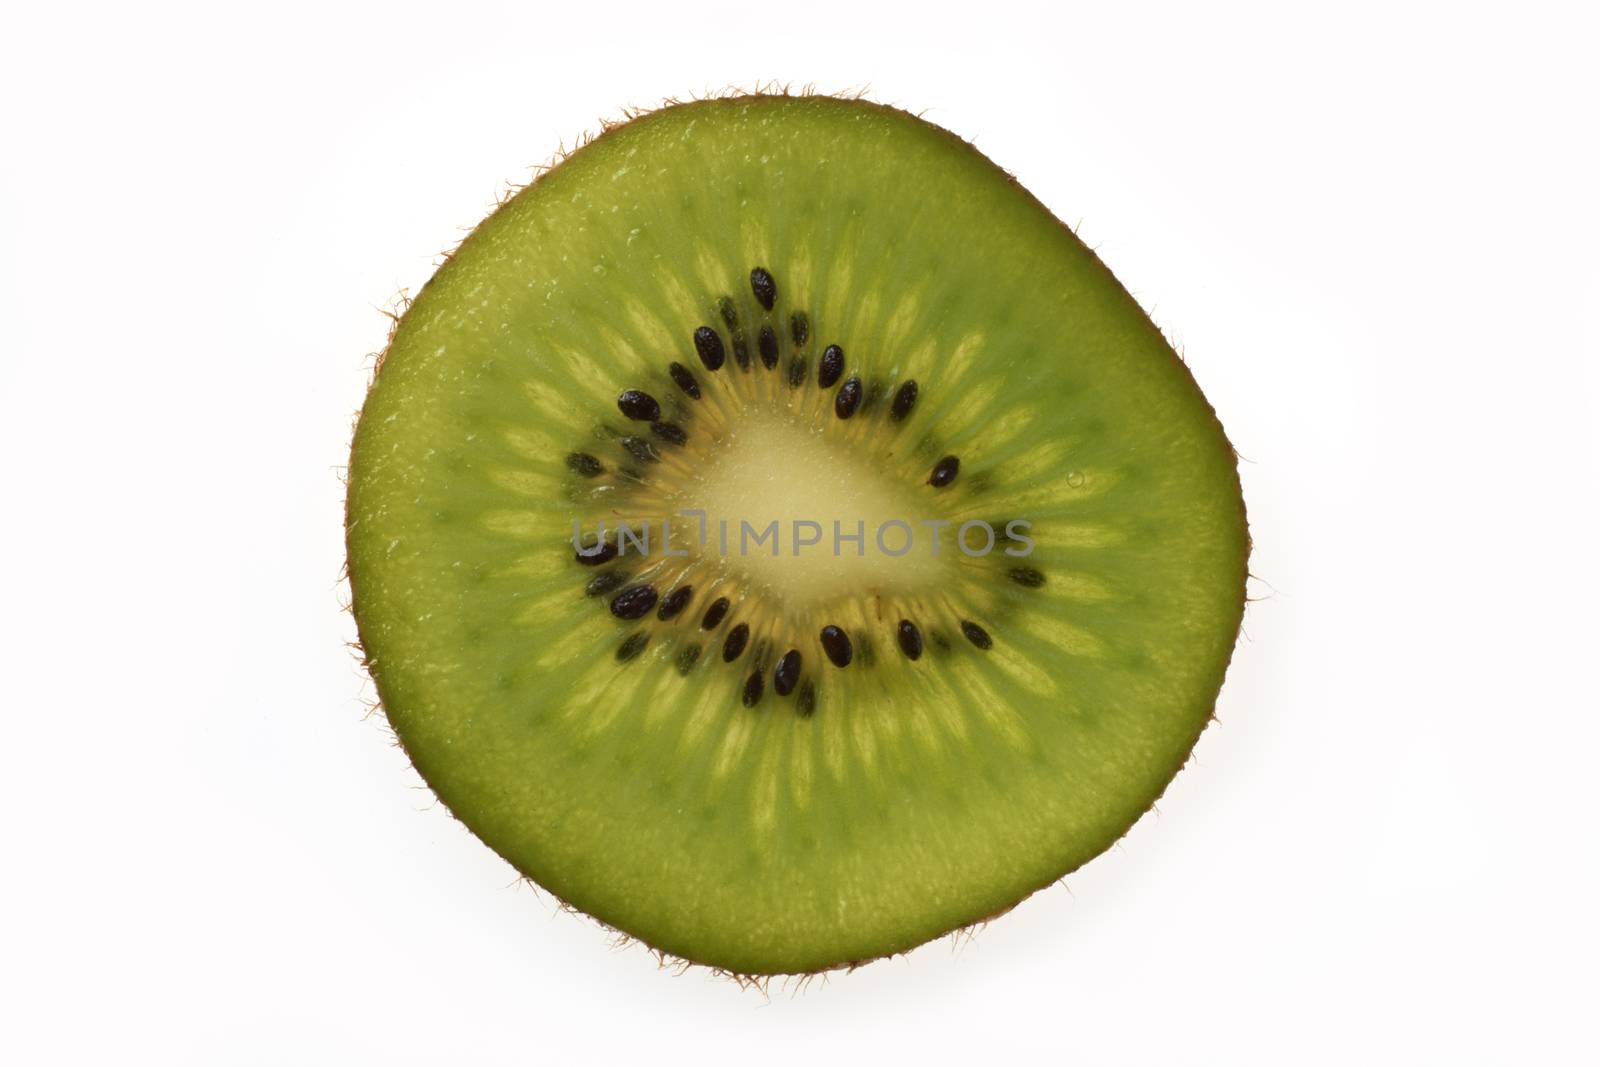 Kiwi by gemphotography